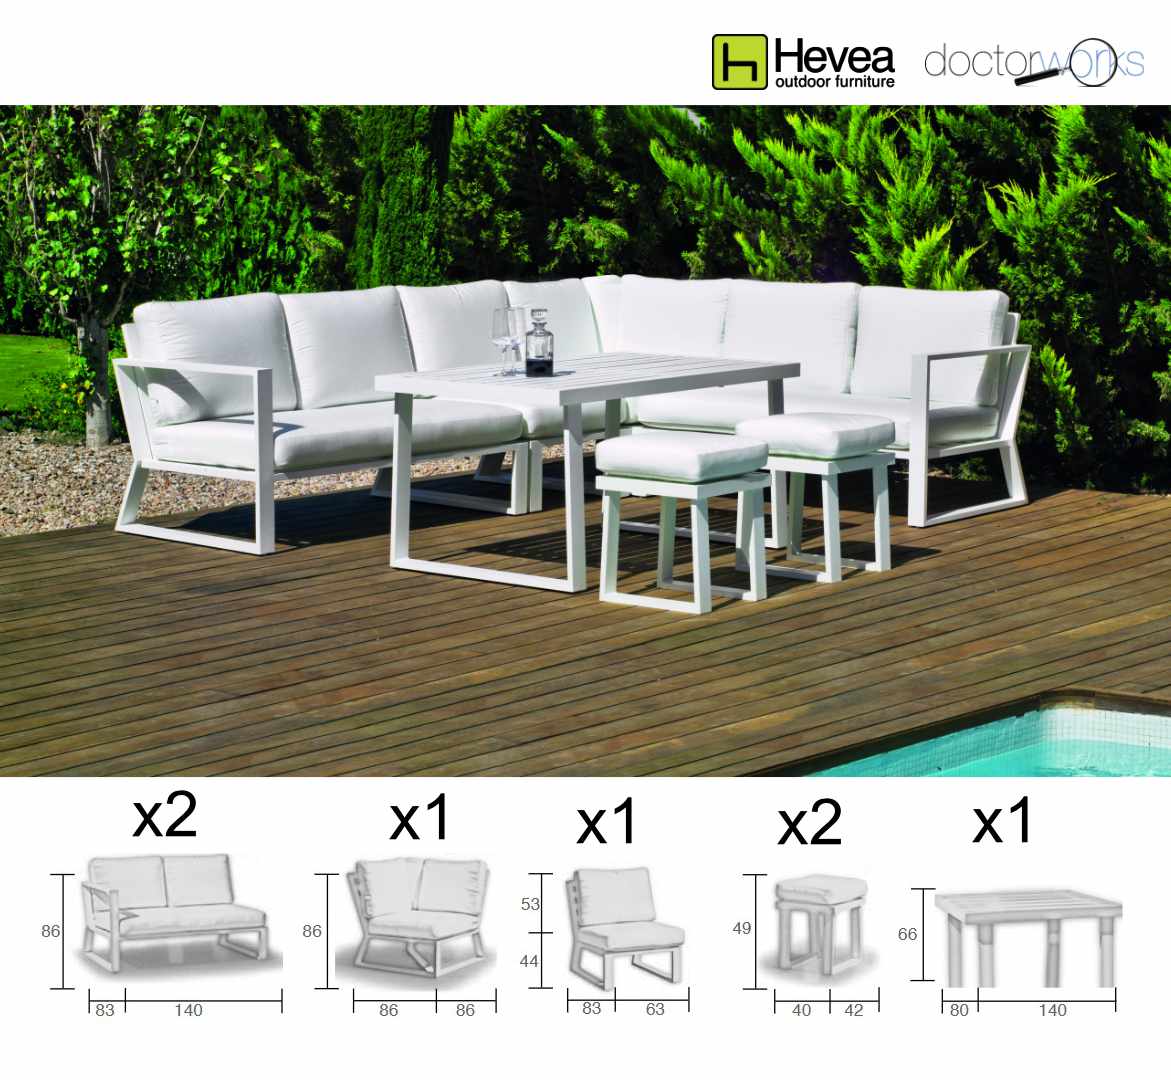 Conjunto Hevea Bolonia 30 sofá rinconera + mesa + 2 taburetes blanco